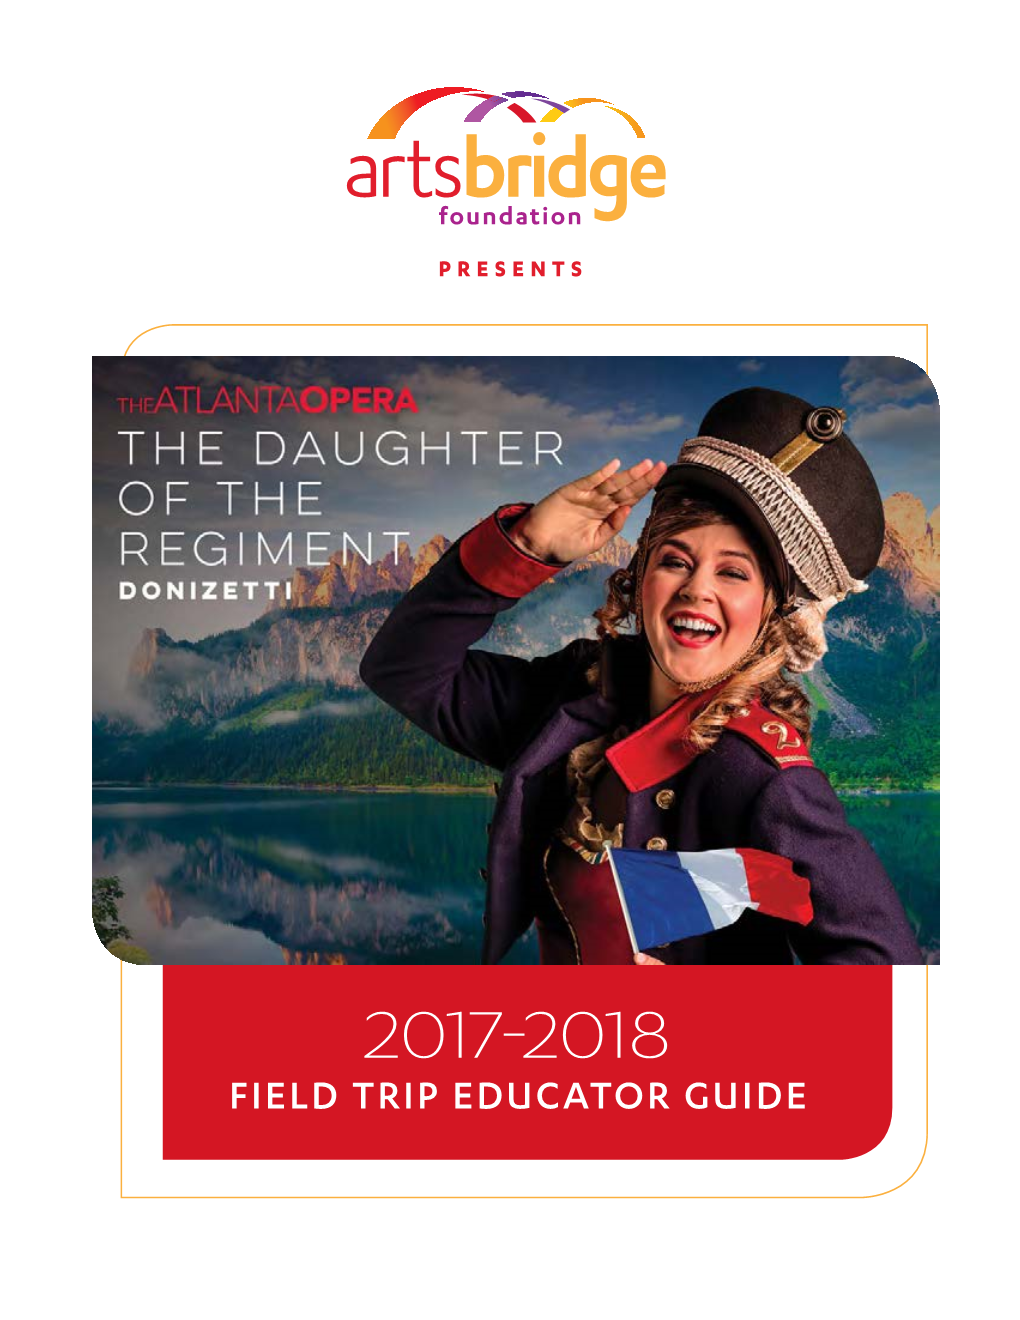 Field Trip Educator Guide Guide Contents